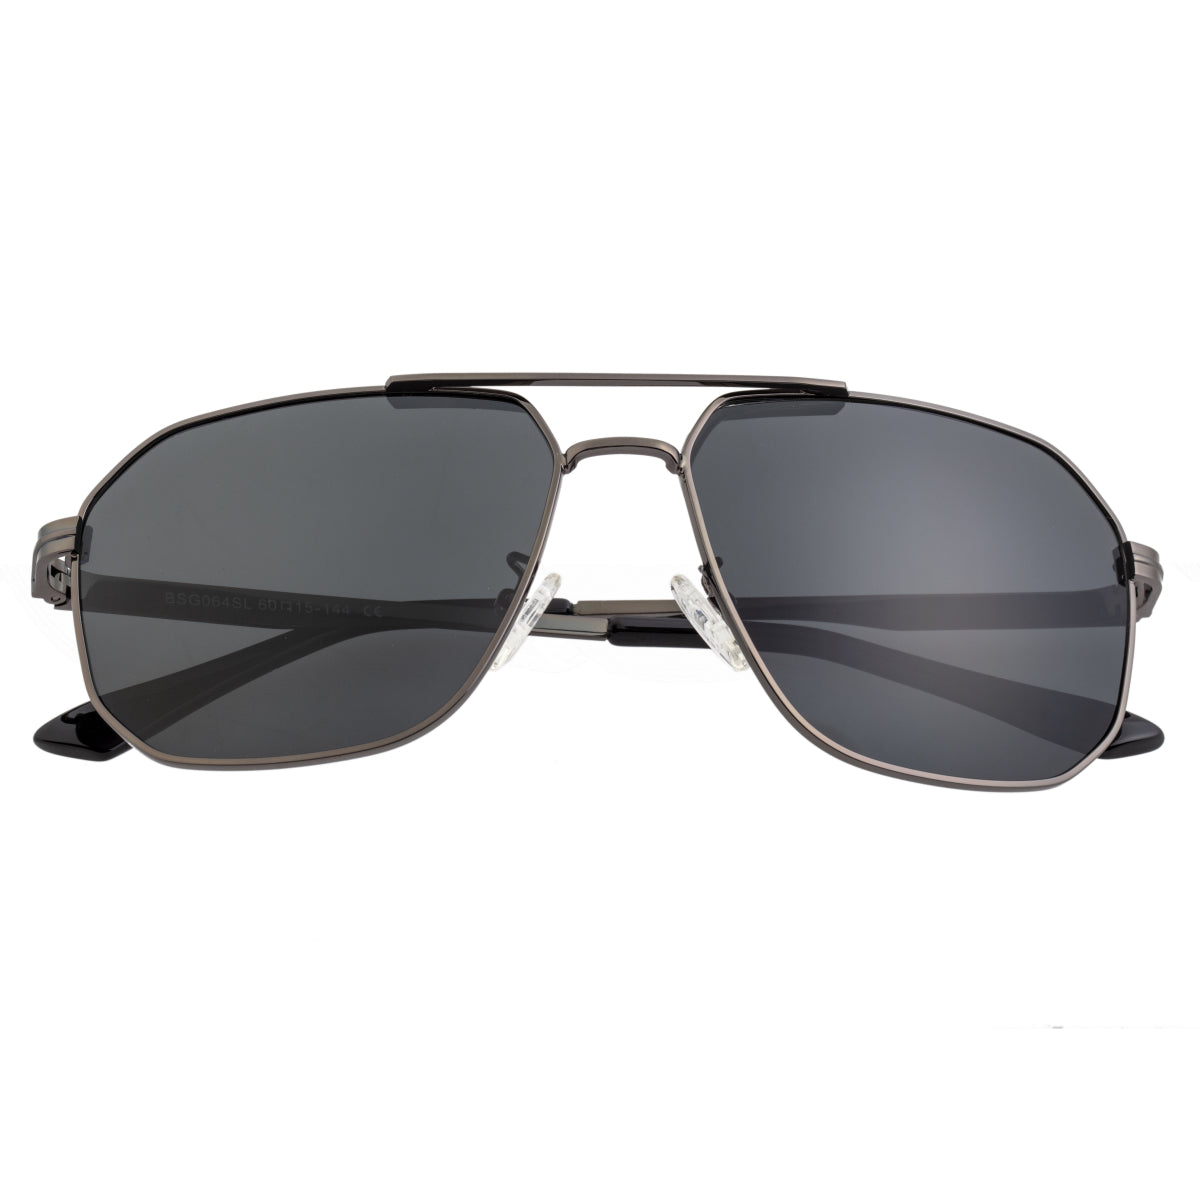 Breed Norma Polarized Sunglasses - Gunmetal/Black - BSG064SL